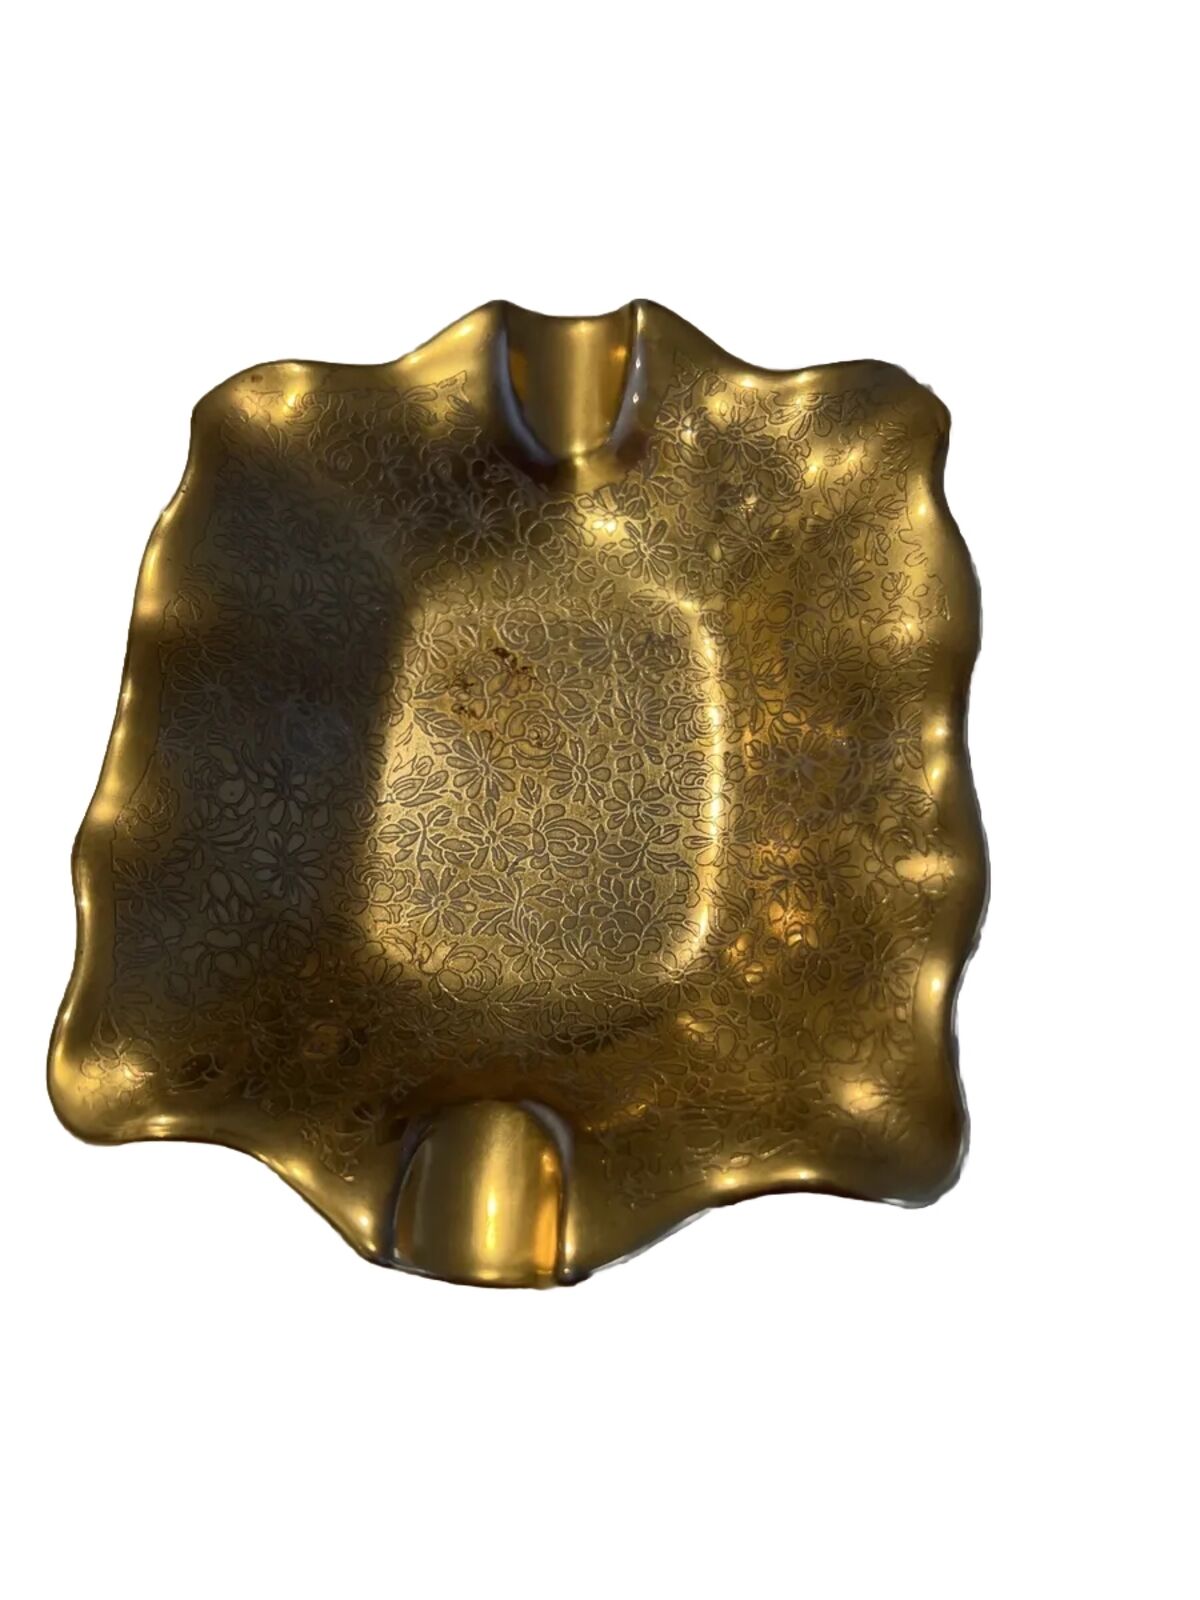 Vintage Pickard China Gold Trinket Tray 5” X 4”